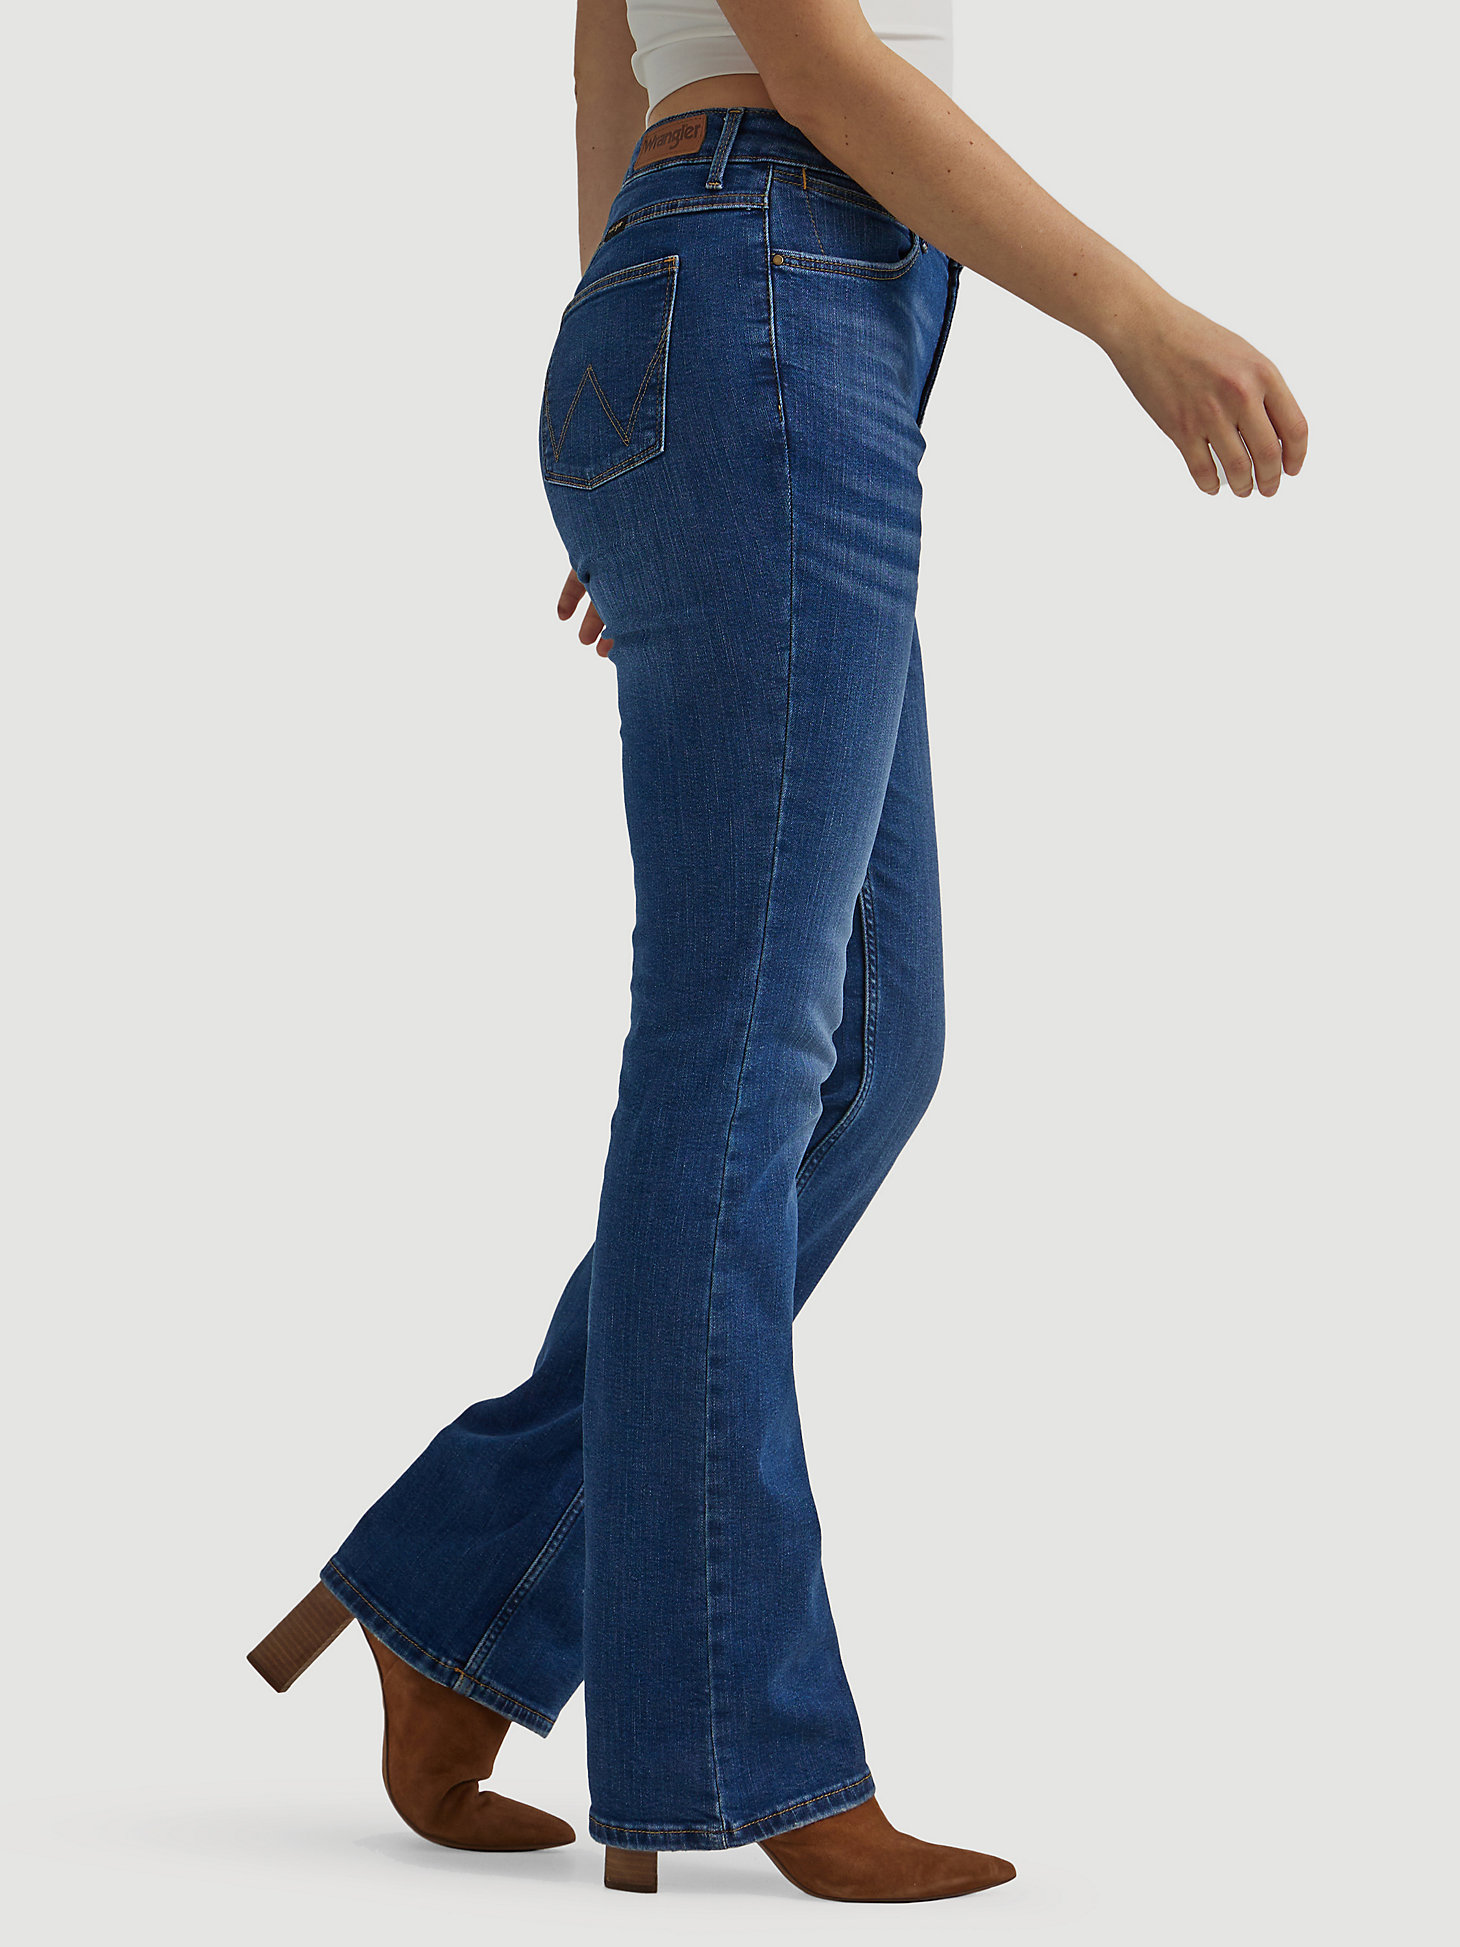 Women's Wrangler® High Rise Bold Boot Jean in Medium alternative view 3